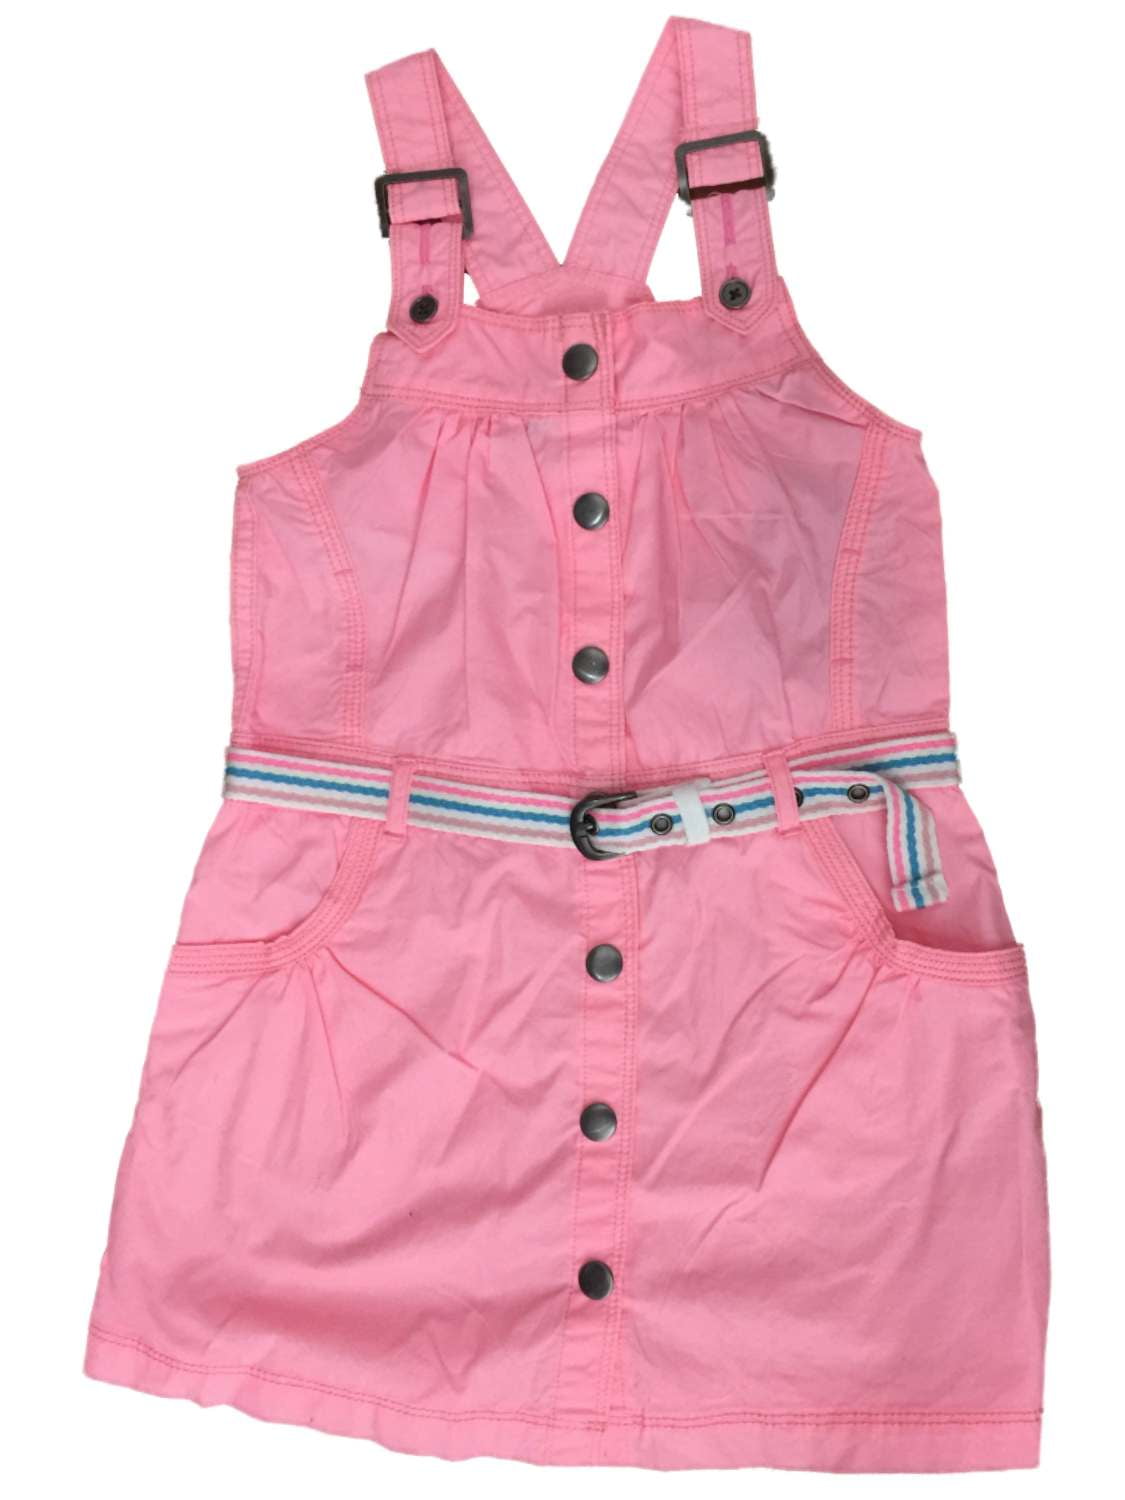 pink overalls skirt